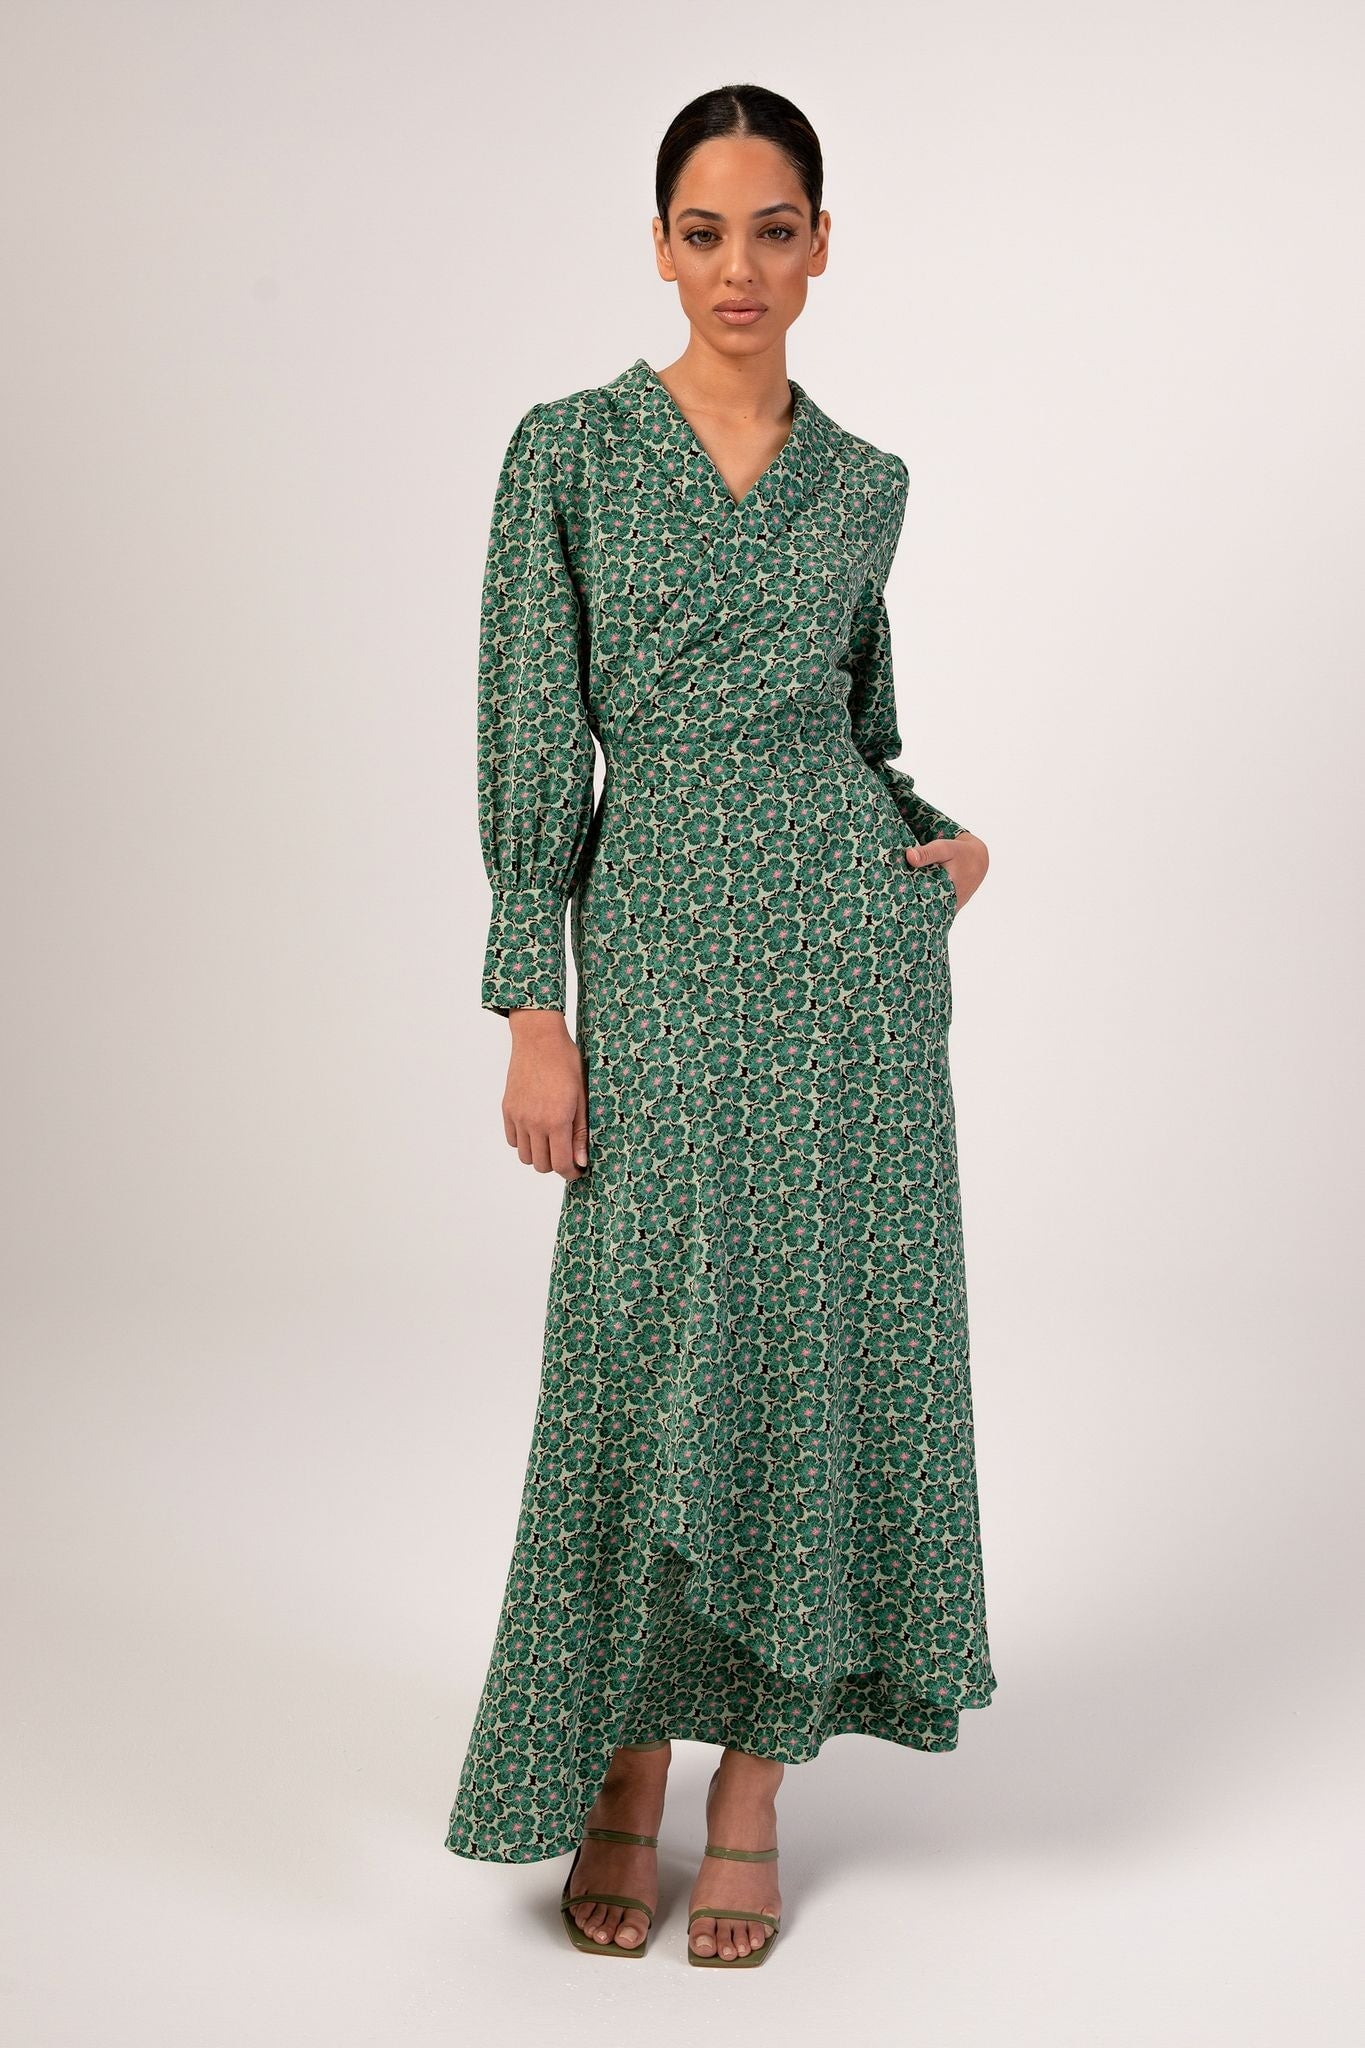 Emaly Green Garden Floral Maxi Dress Veiled Collection 